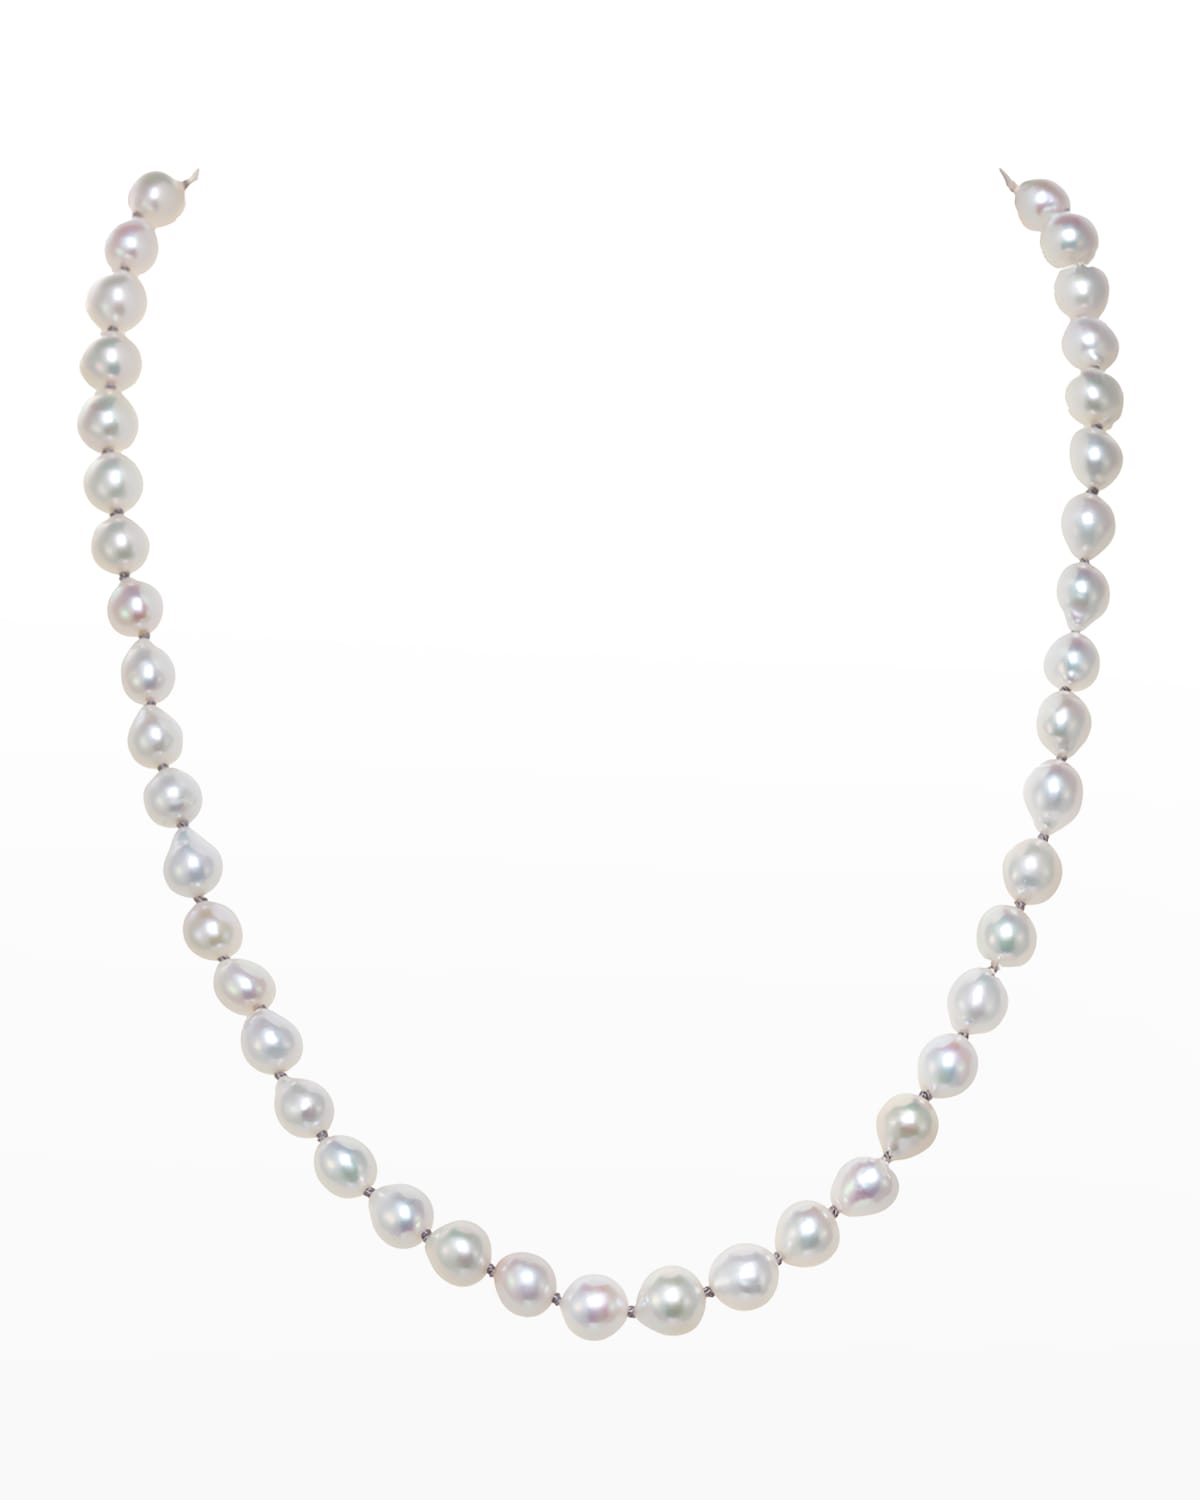 Margo Morrison Petite White Baroque Pearl Necklace, 7-8 Mm, 18"l